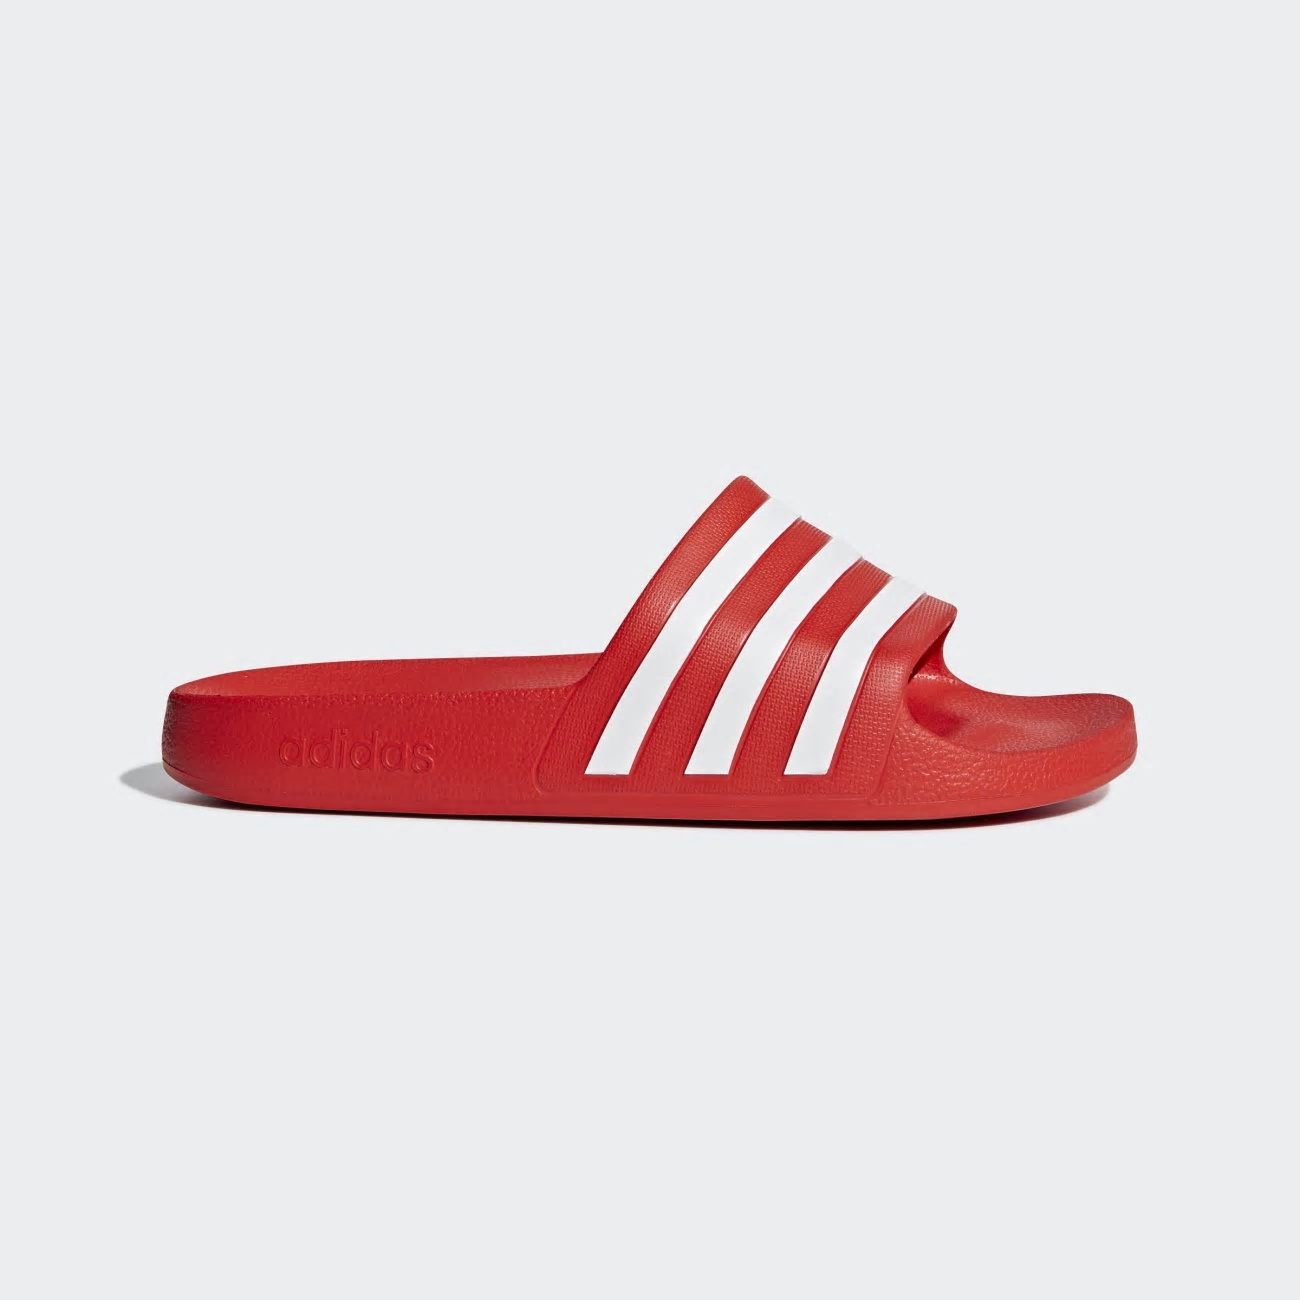 Adidas Adilette Aqua Női Akciós Cipők - Piros [D79891]